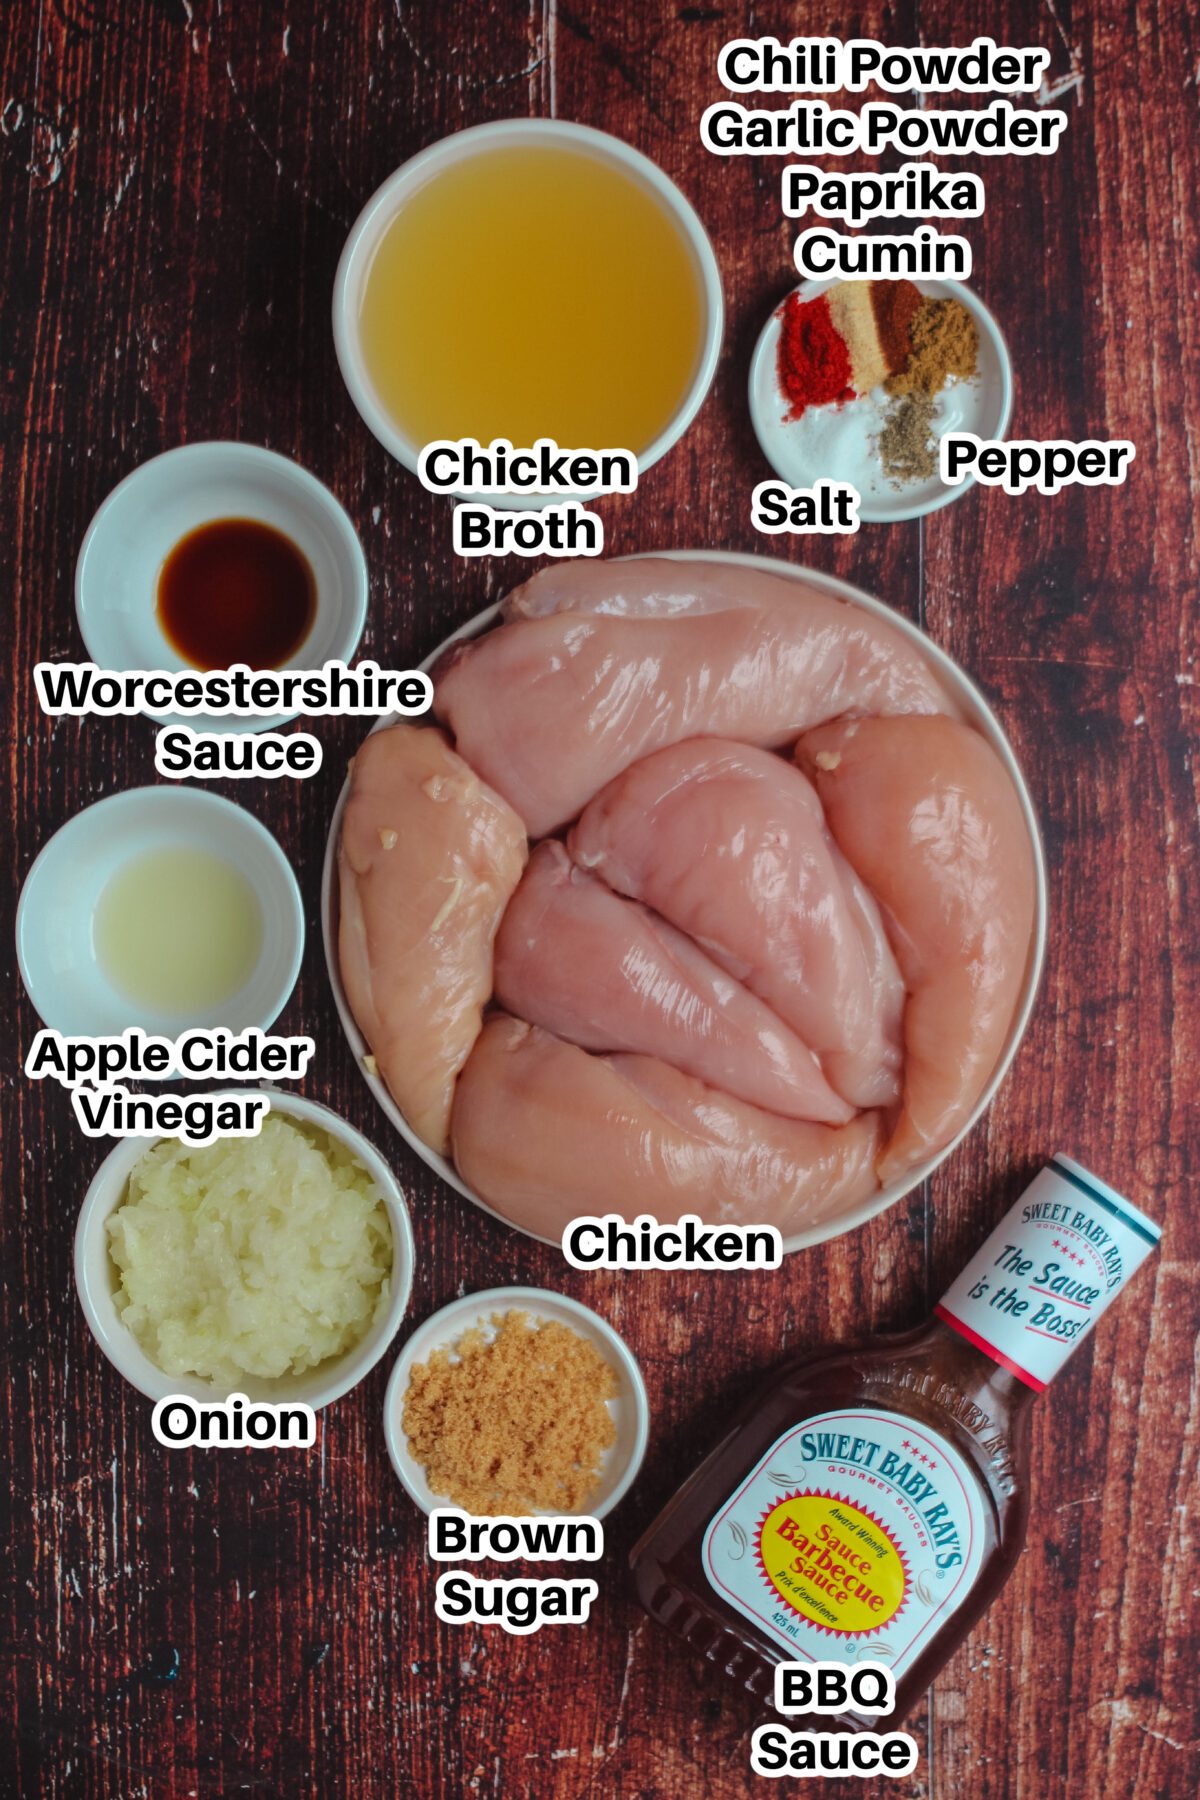 Ingredients for BBQ Chicken